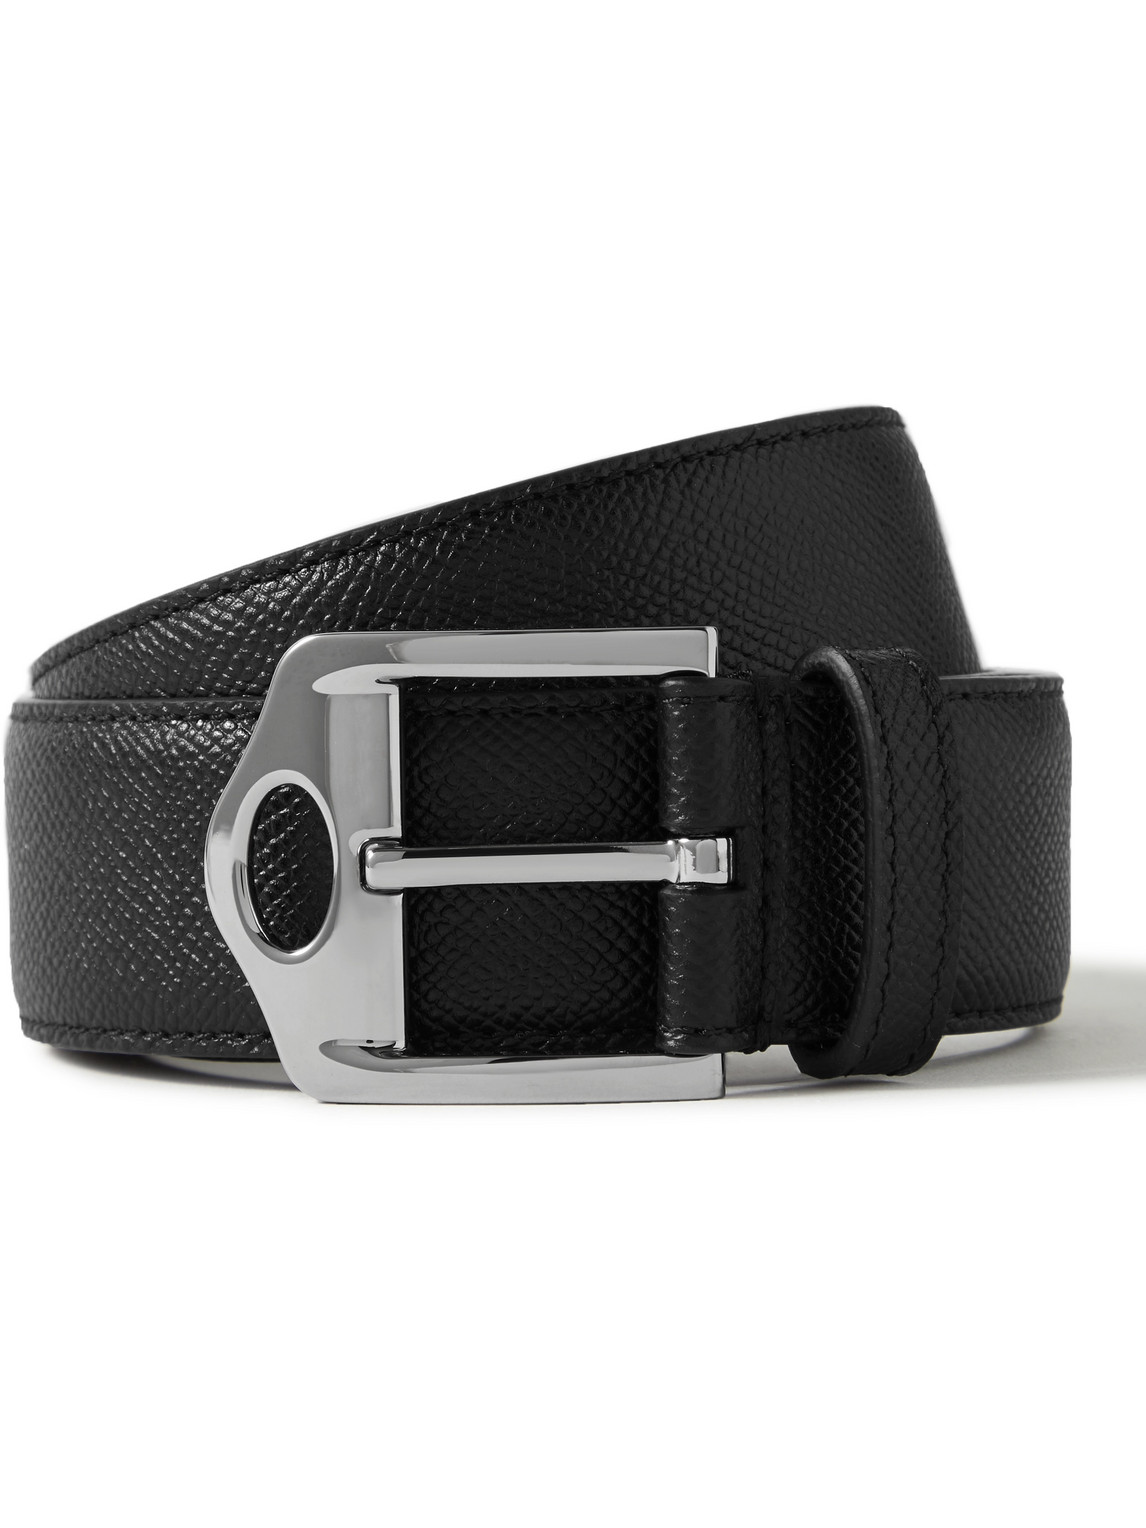 3.5cm Pebble-Grain Leather Belt